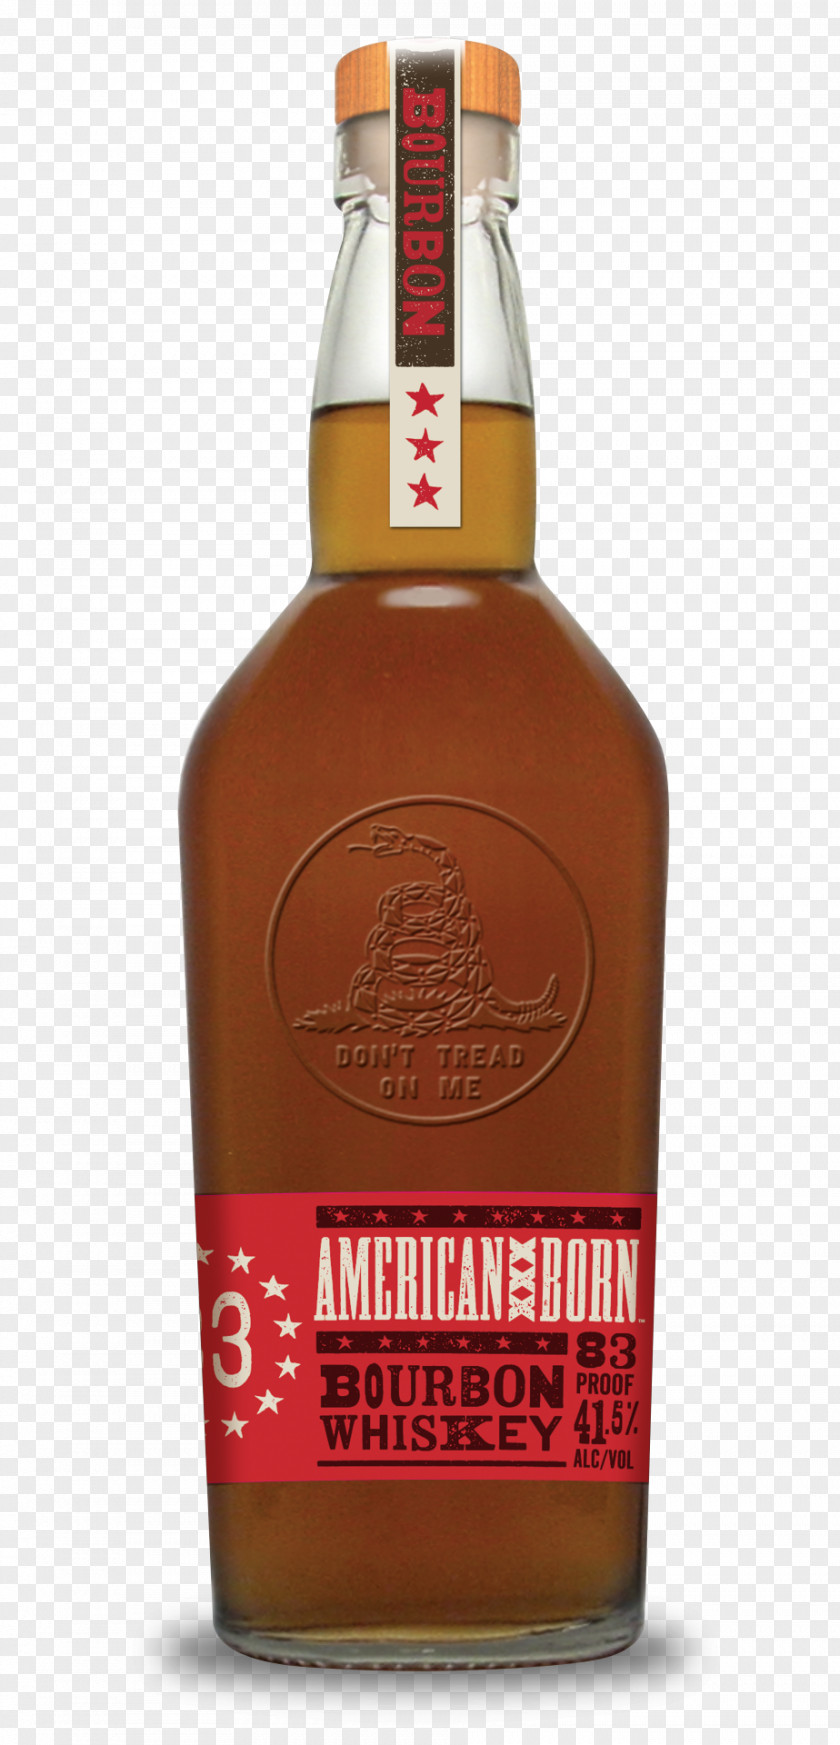 Whiskey Bourbon Rye United States Distilled Beverage PNG